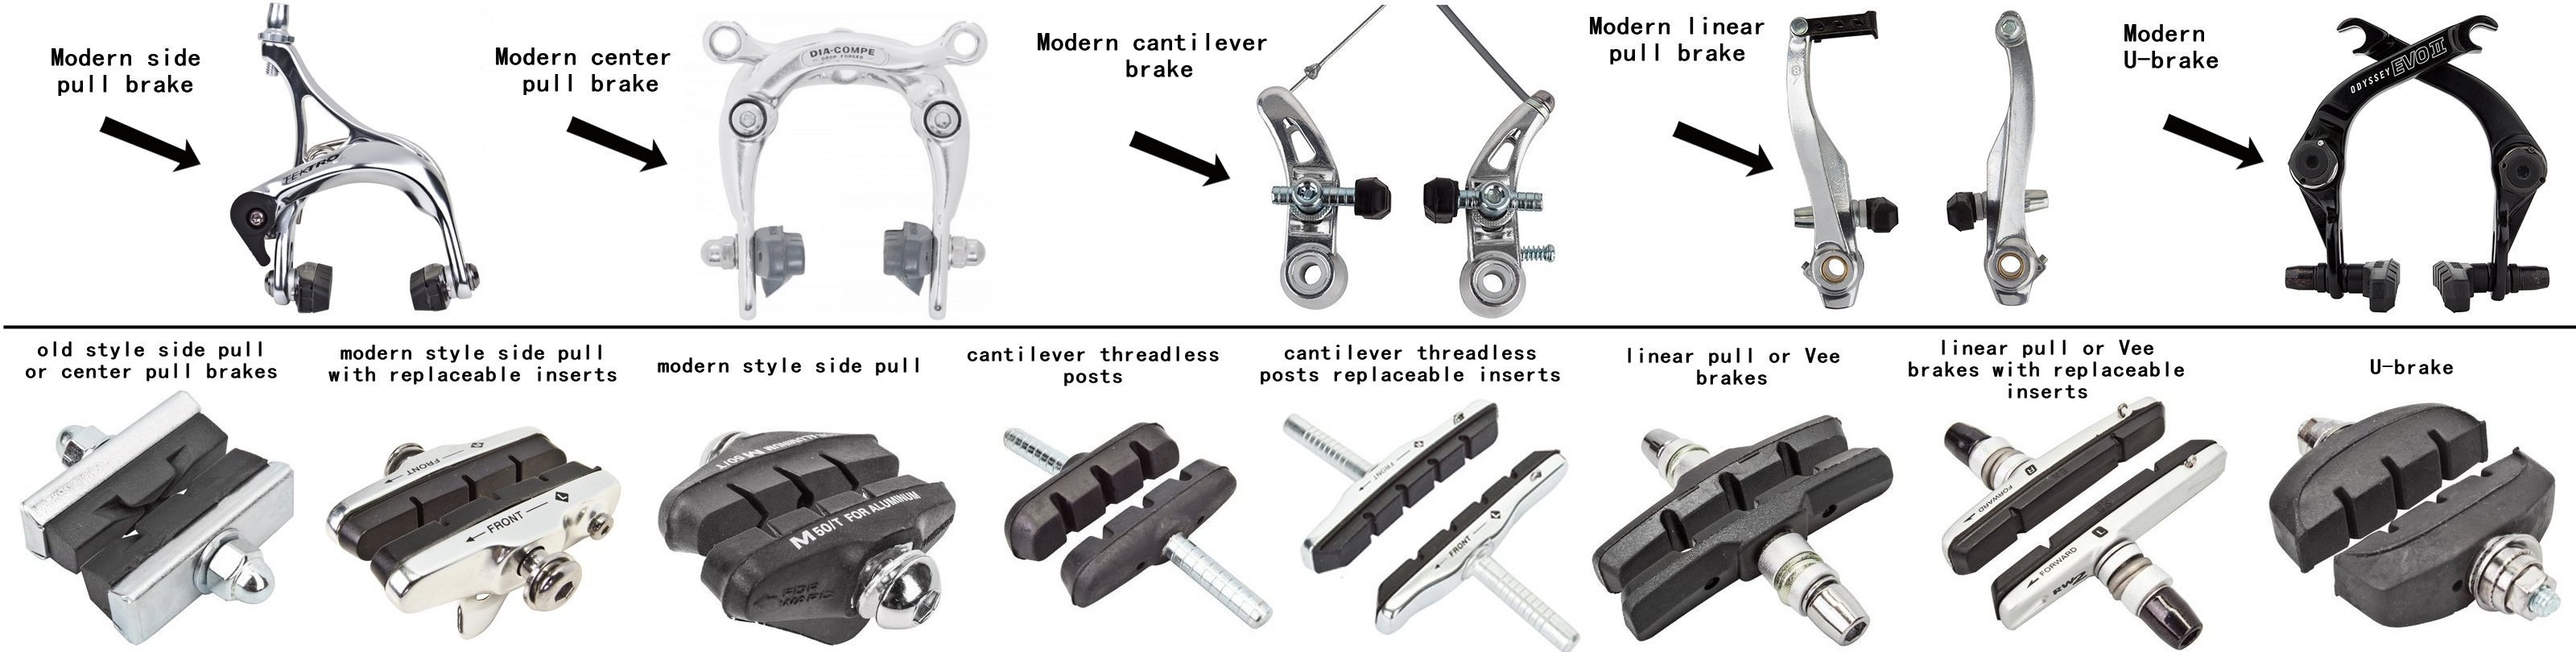 bicycle types of brakes